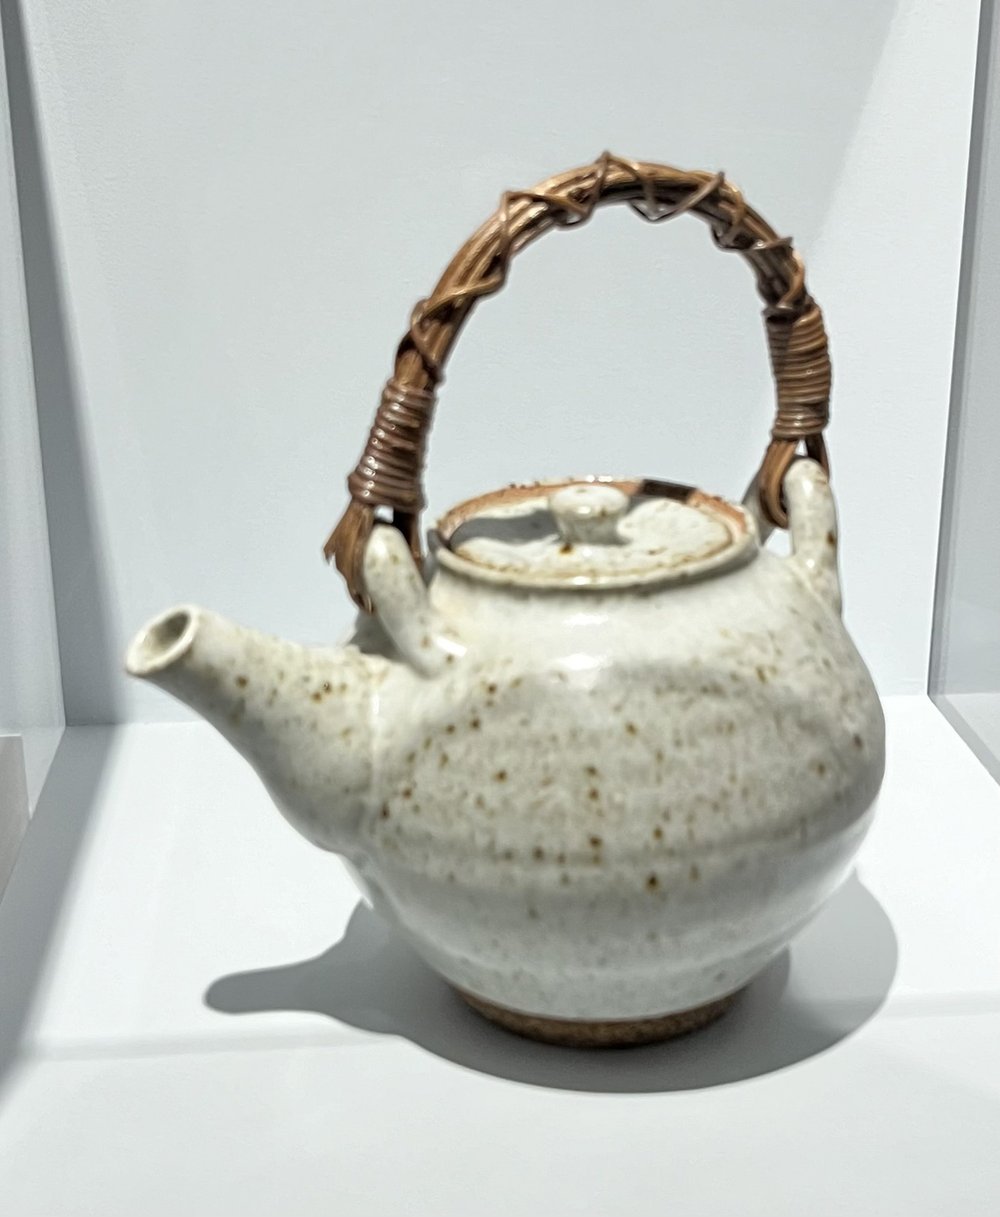 Mingei exhibition - April 24 - White glazed tea pot with bamboo basket handle.jpg